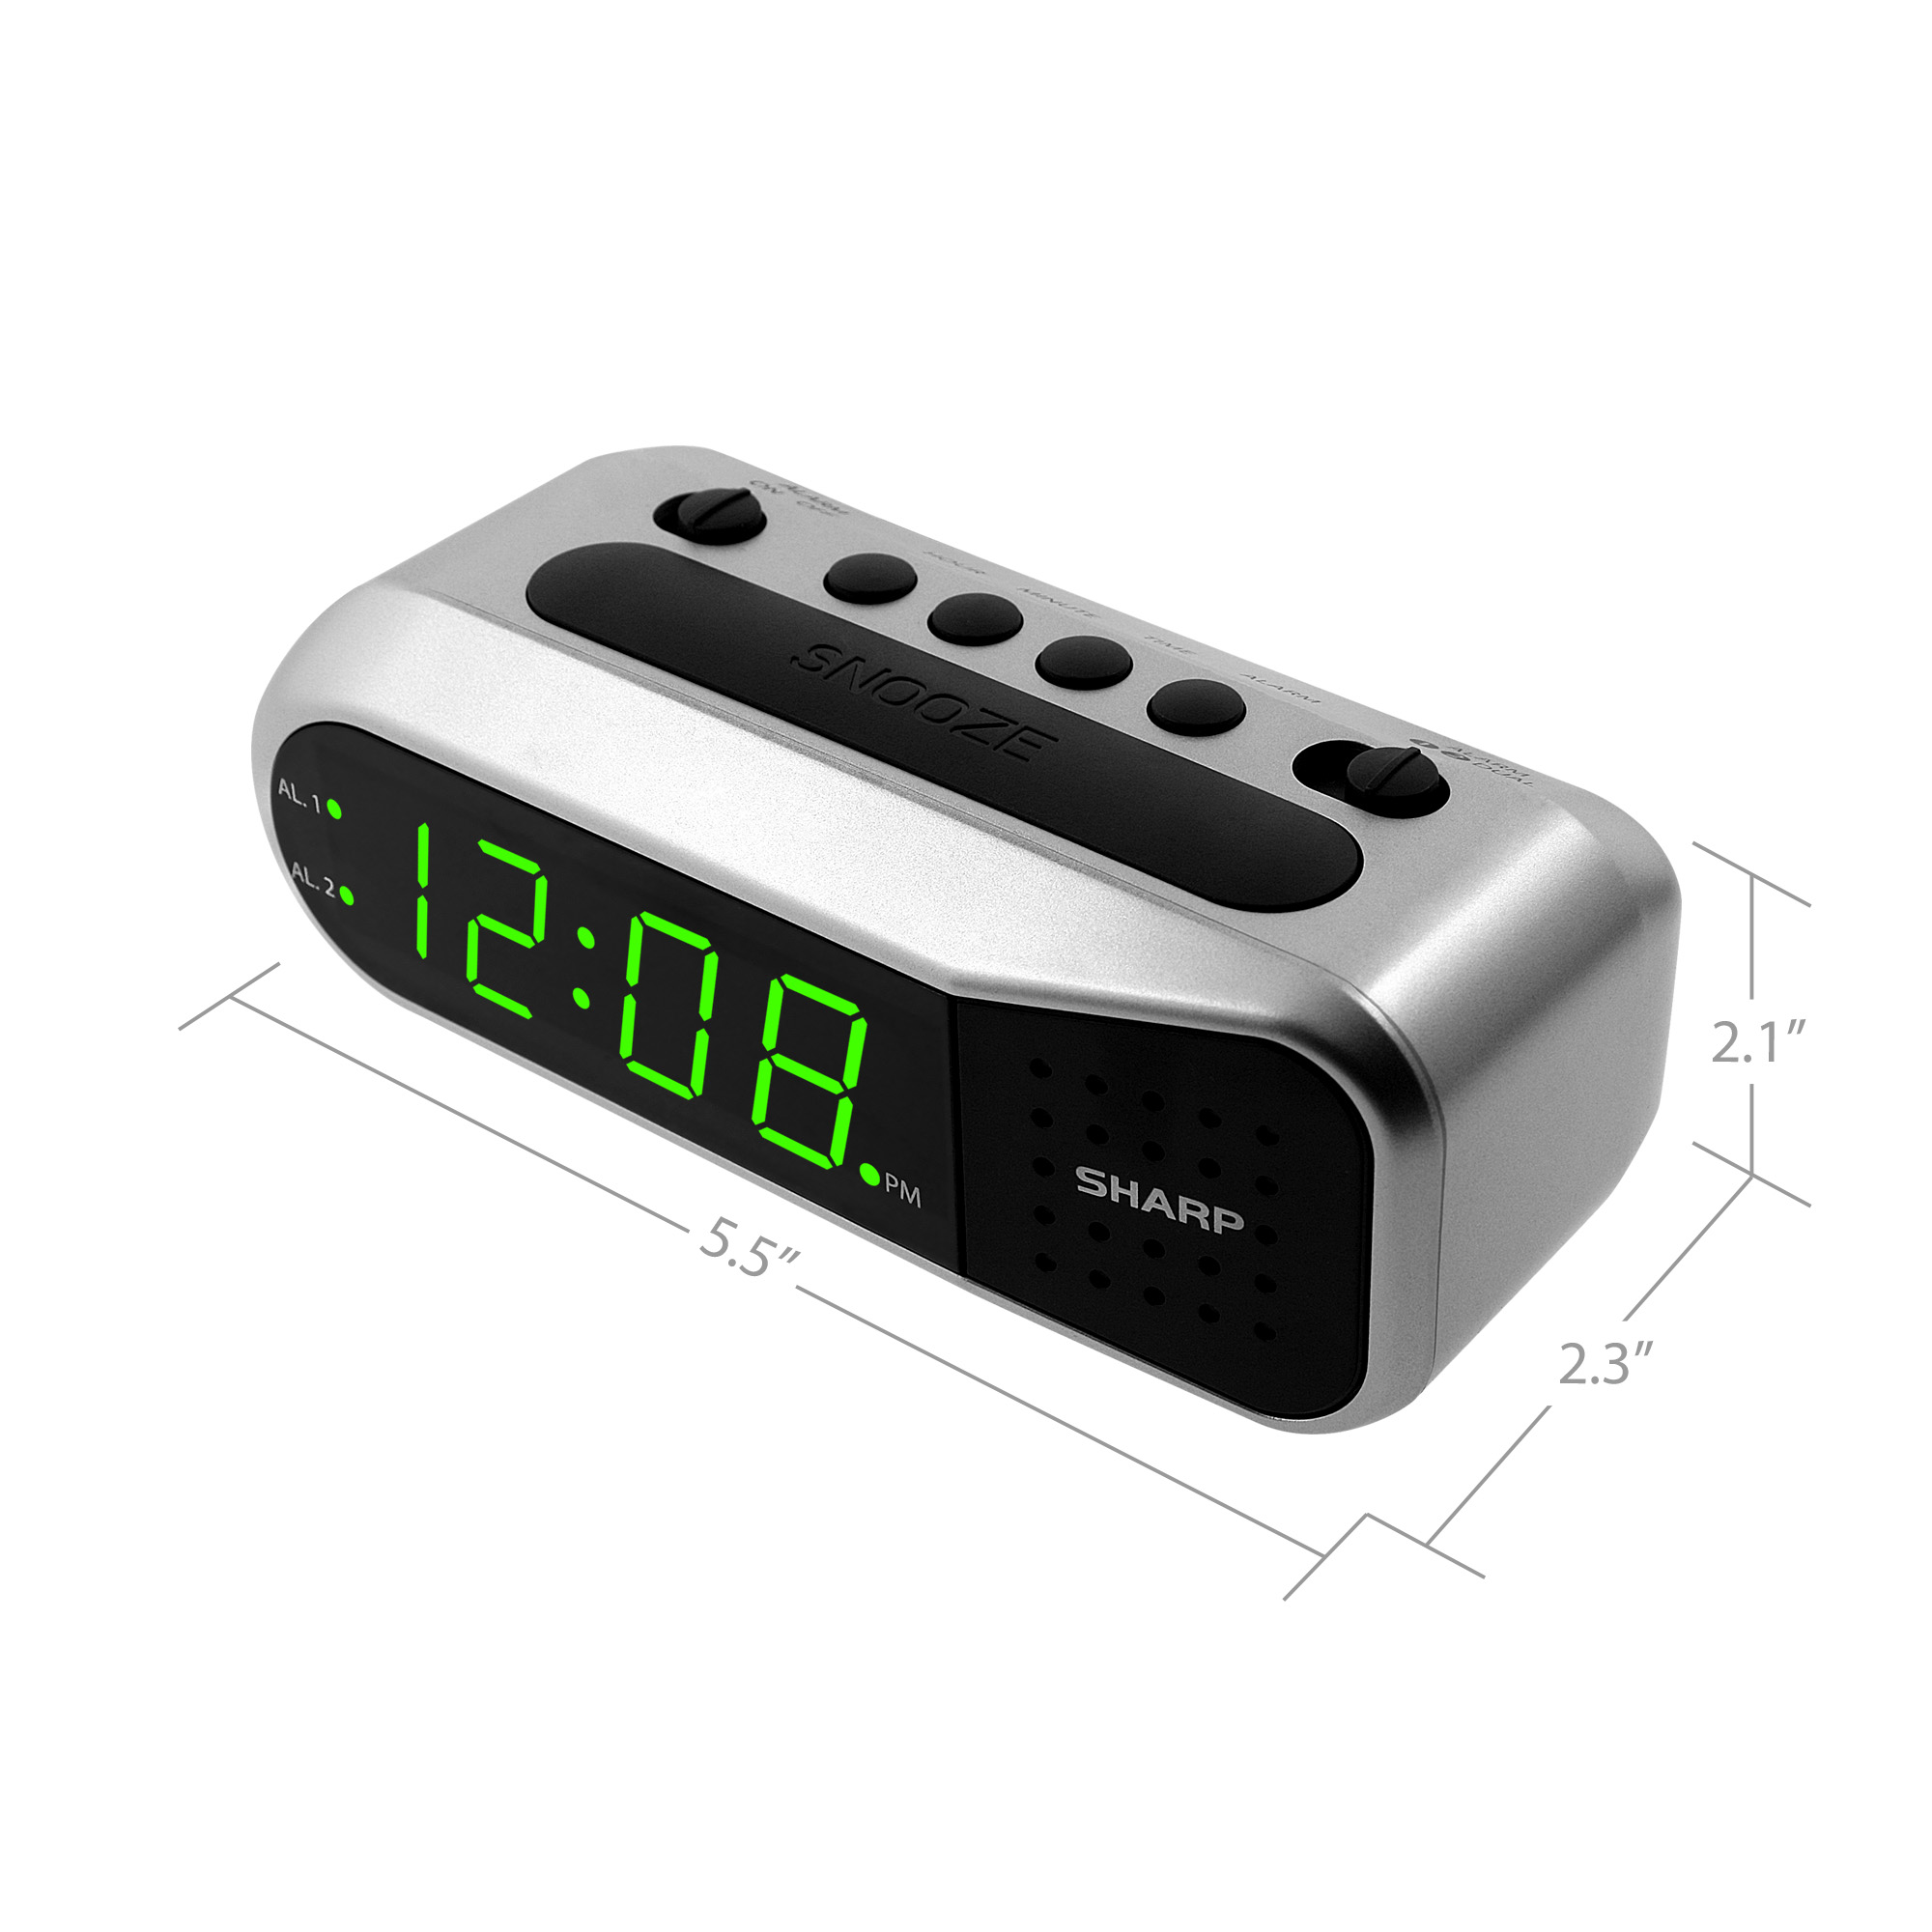 SHARP Digital Dual Alarm Clock, Silver with Green LED Display, Ascending Alarm - image 5 of 6